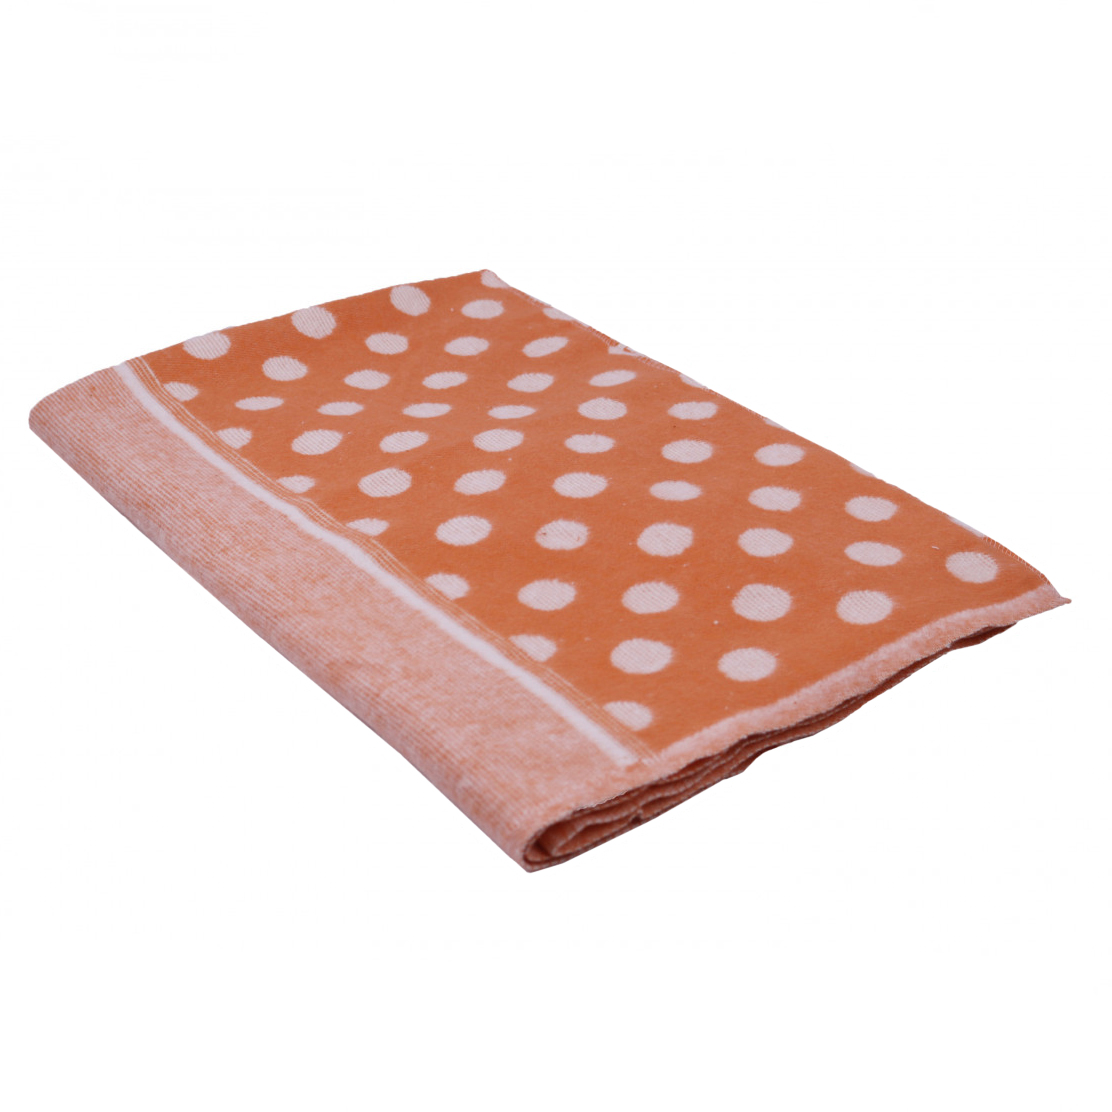 Детское одеяло теплое Кит (100х140 см), размер 100х140 см valt828048 Детское одеяло теплое Кит (100х140 см) - фото 1